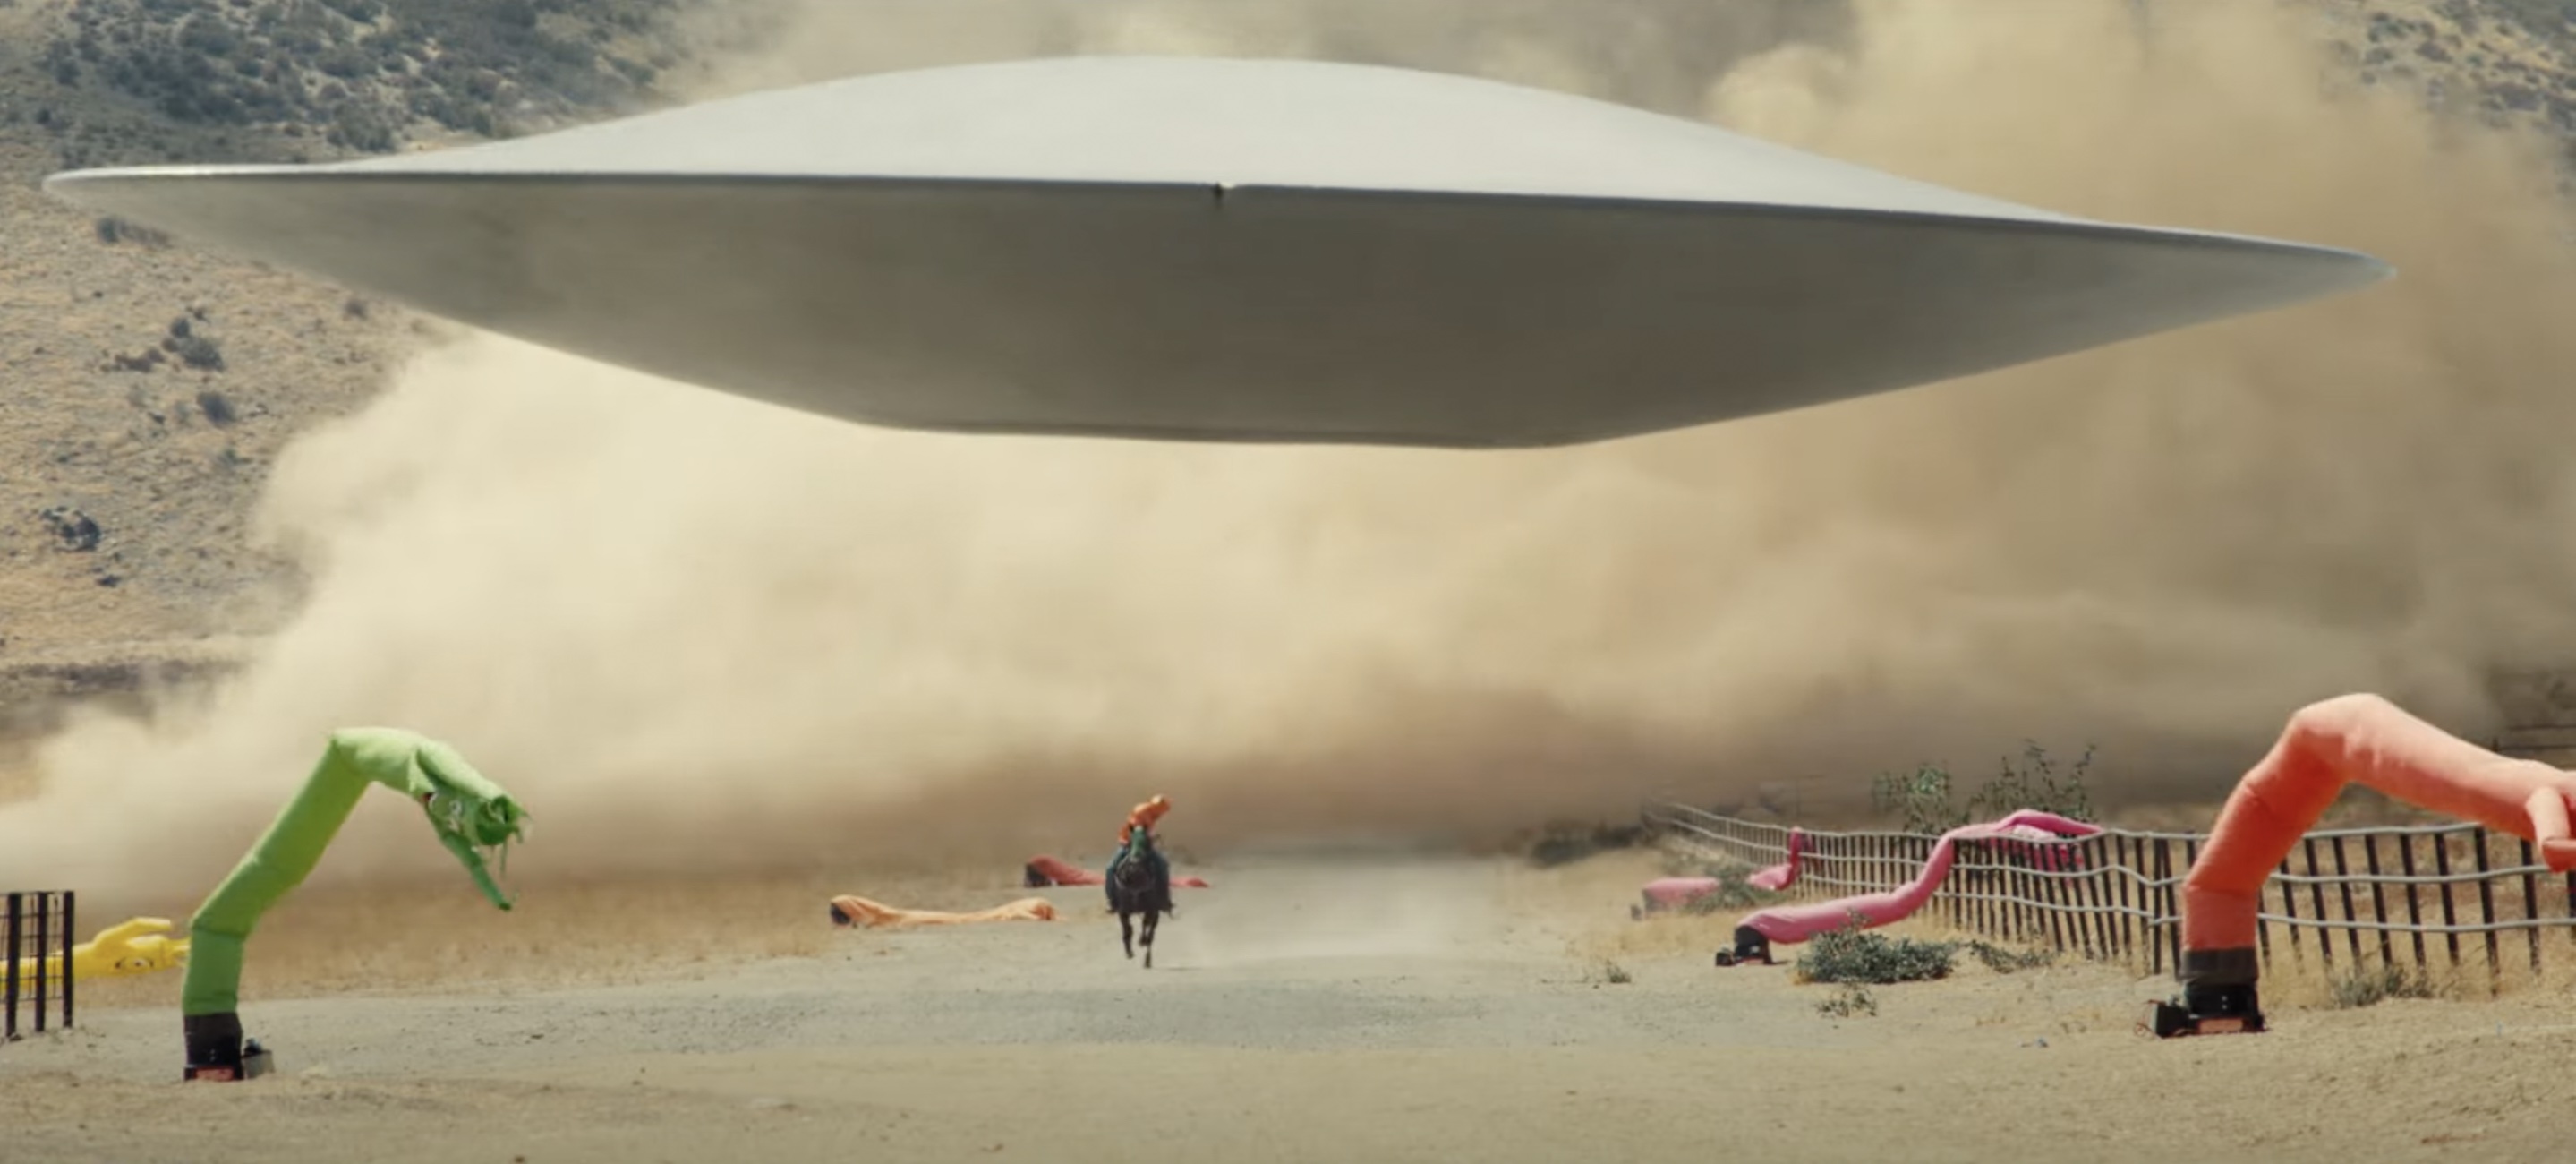 Jordan Peele Sci Fi Horror Movie 'Nope' Trailer Reveals Flying Saucer